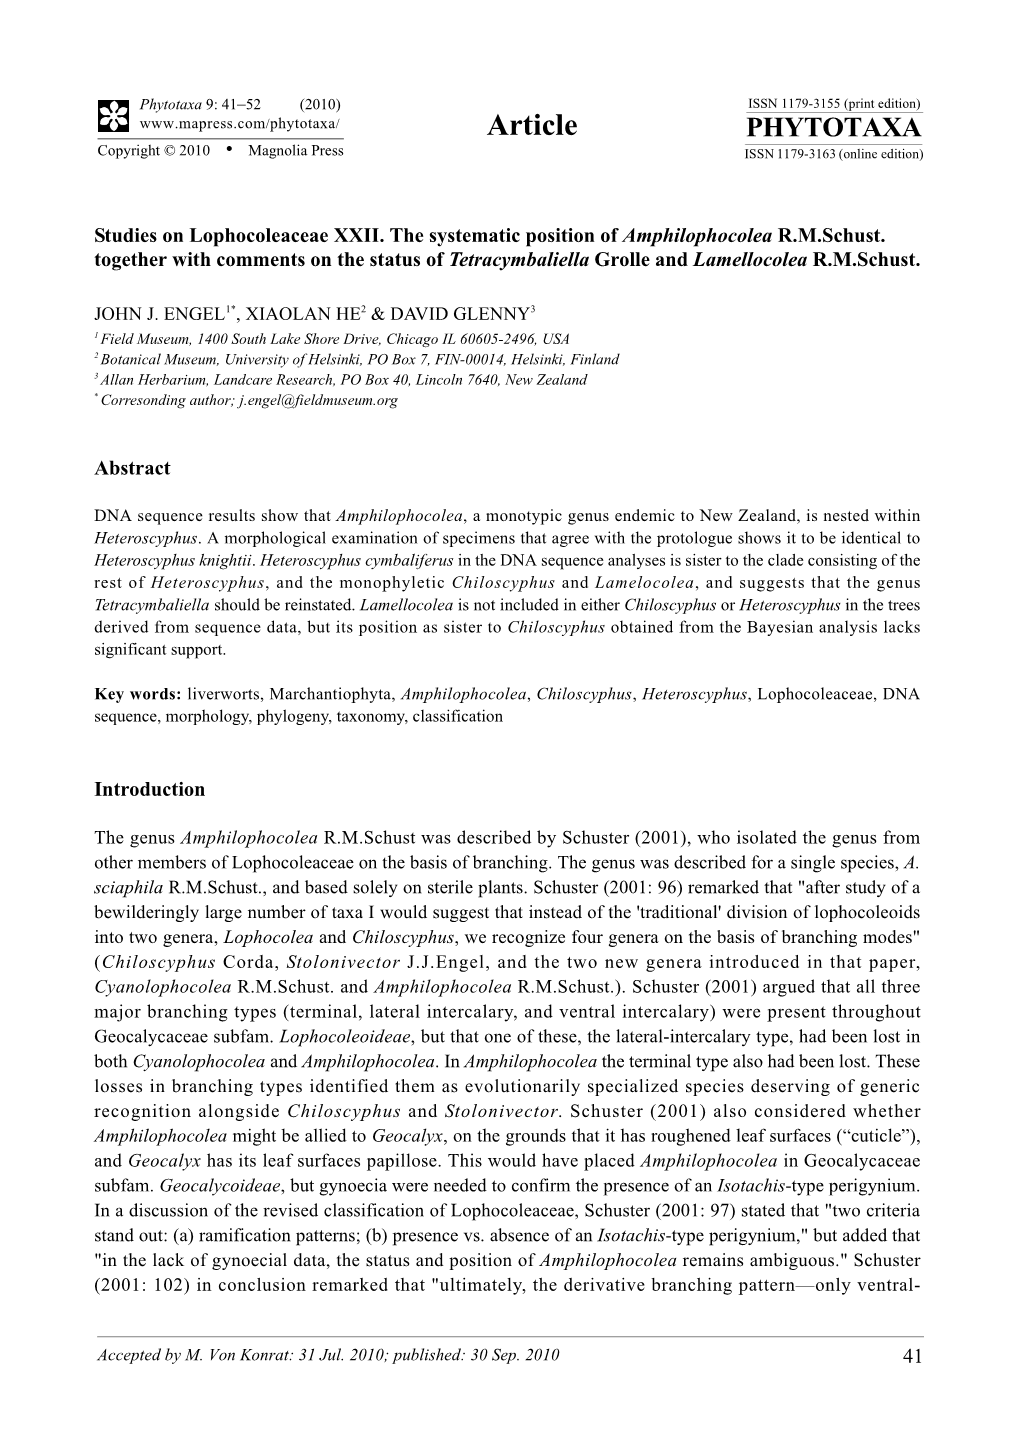 Phytotaxa, Studies on Lophocoleaceae XXII. The